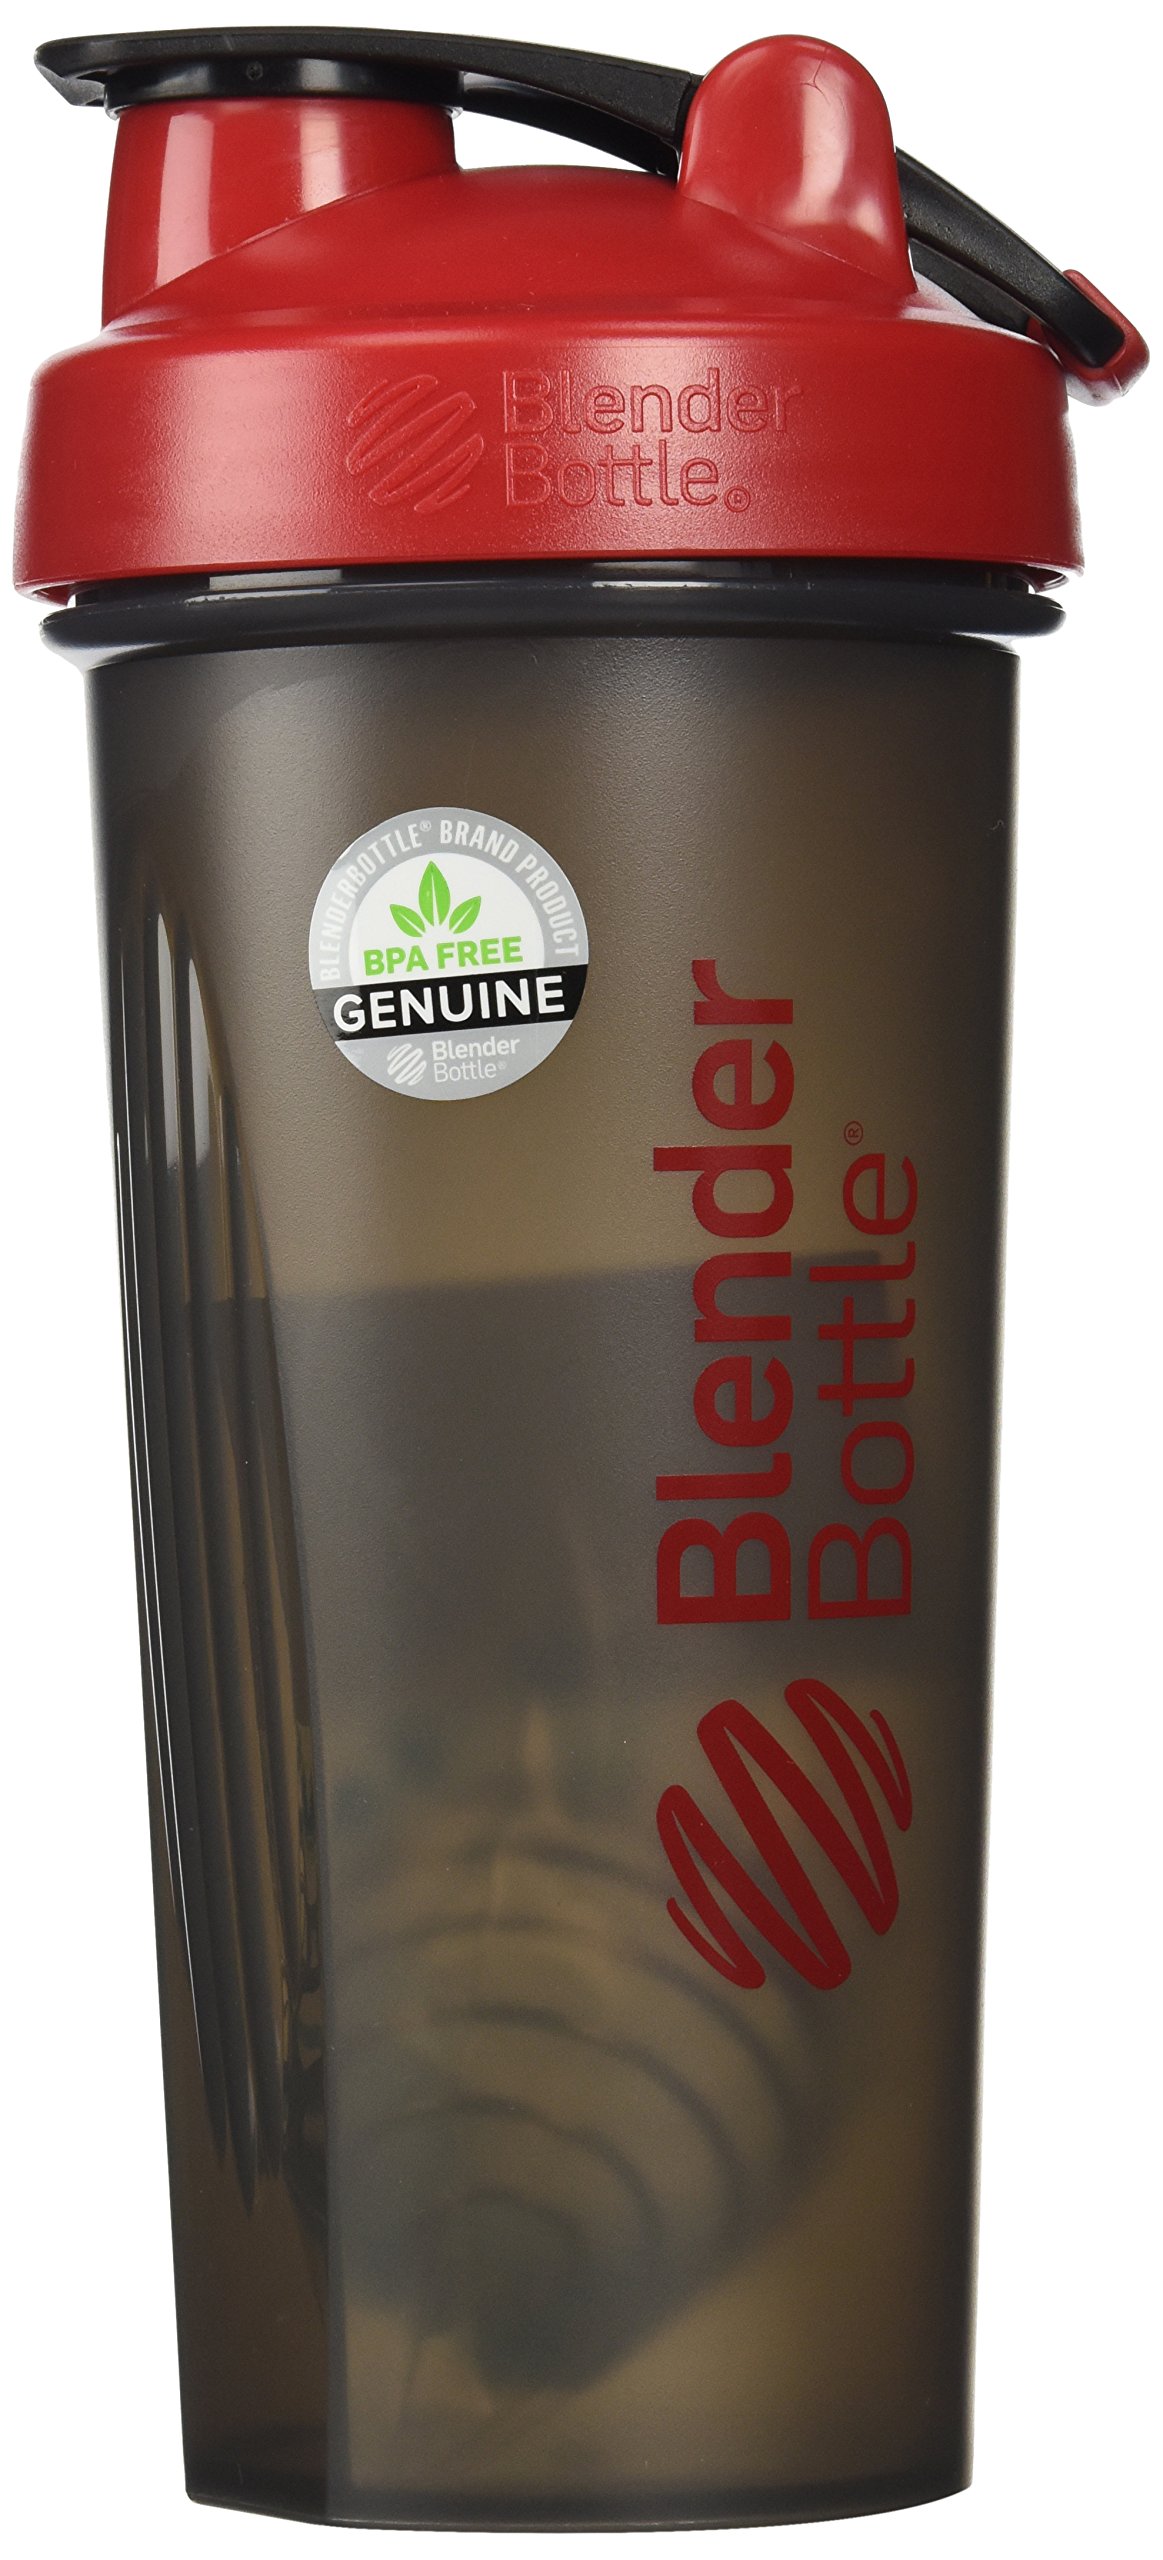 Blender Bottle Sport Mixer, Black/Red - 28 oz